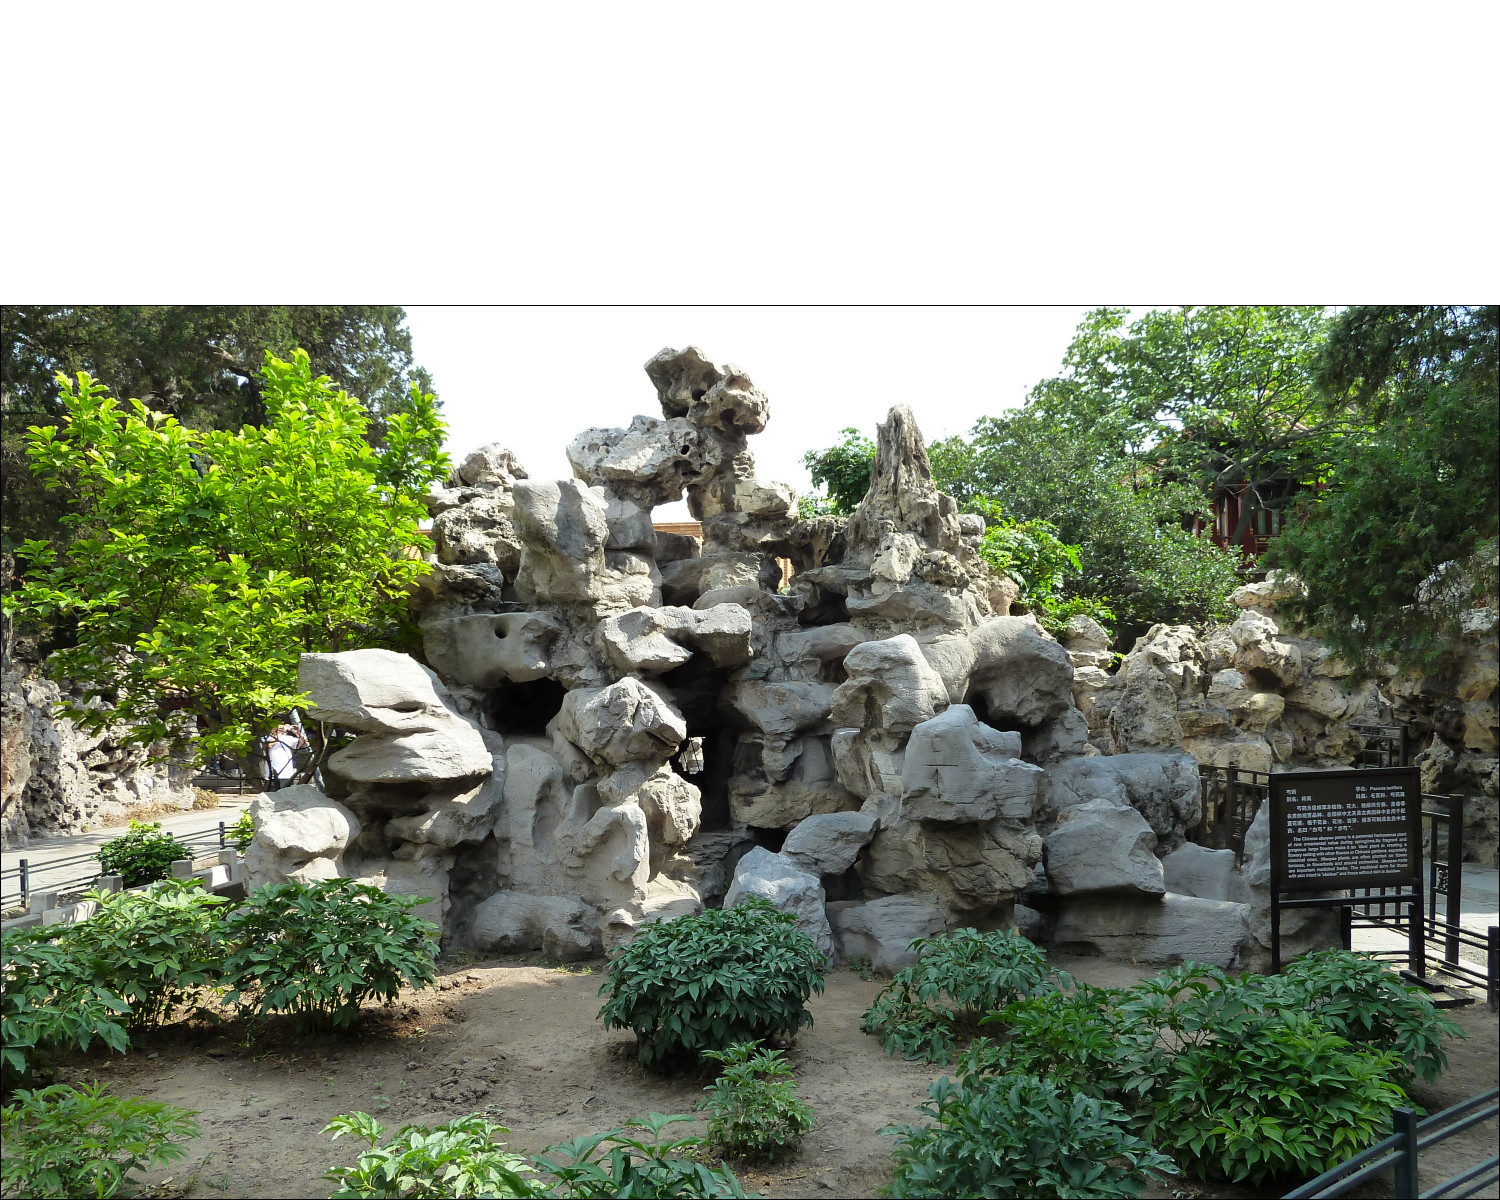 Artificial rockery in the Imperial Garden of the Forbidden City.